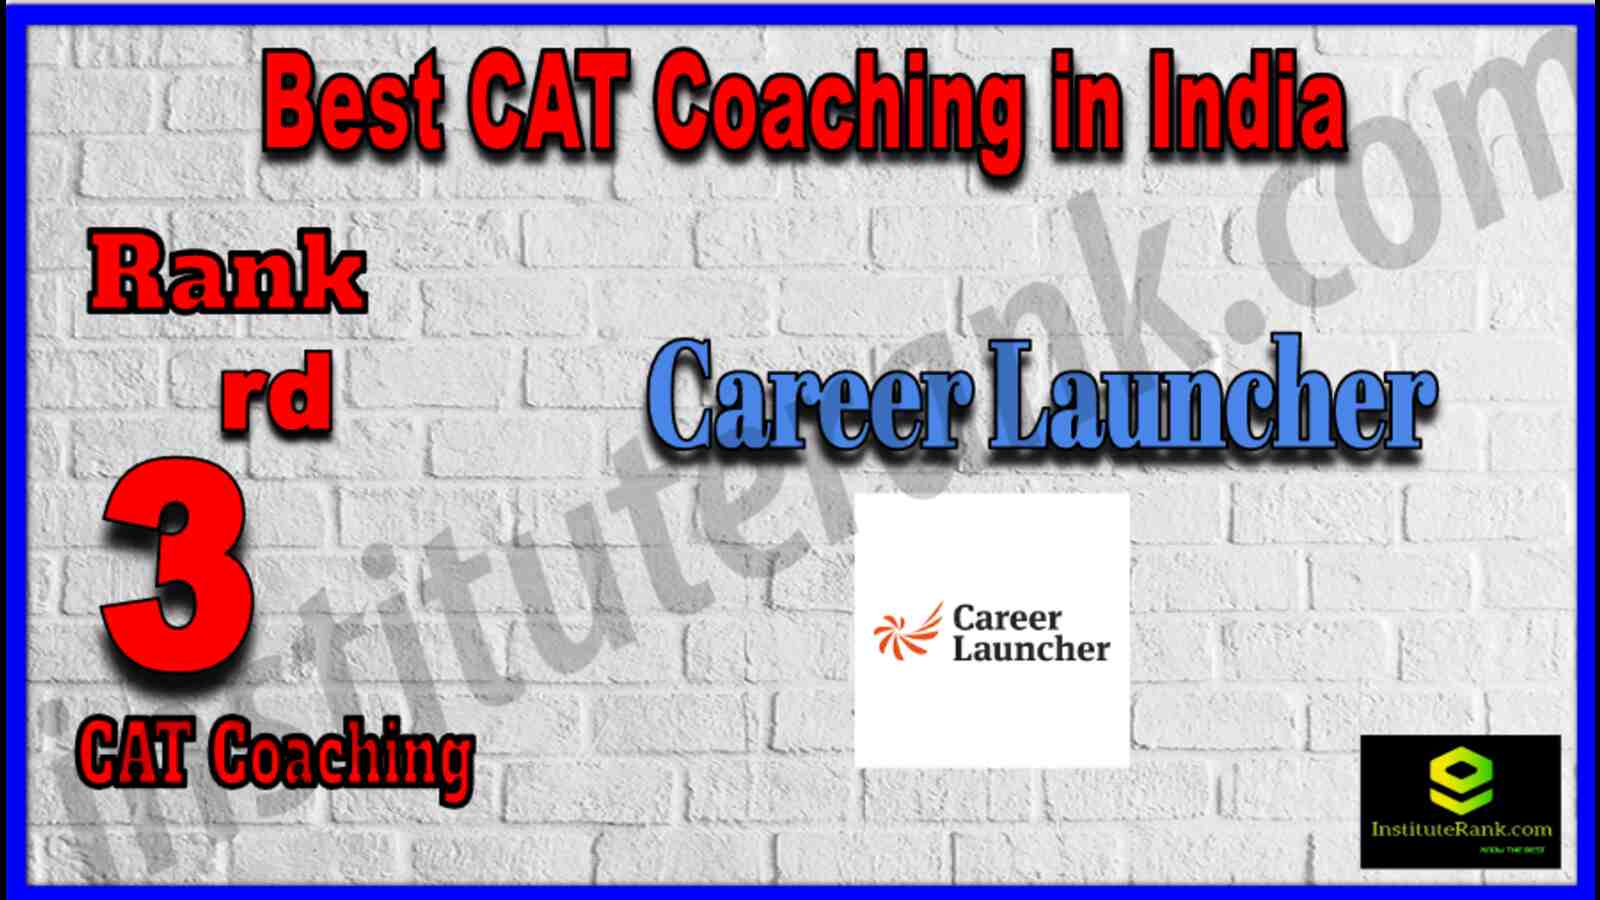 Rank 3 Best CAT Coaching in India